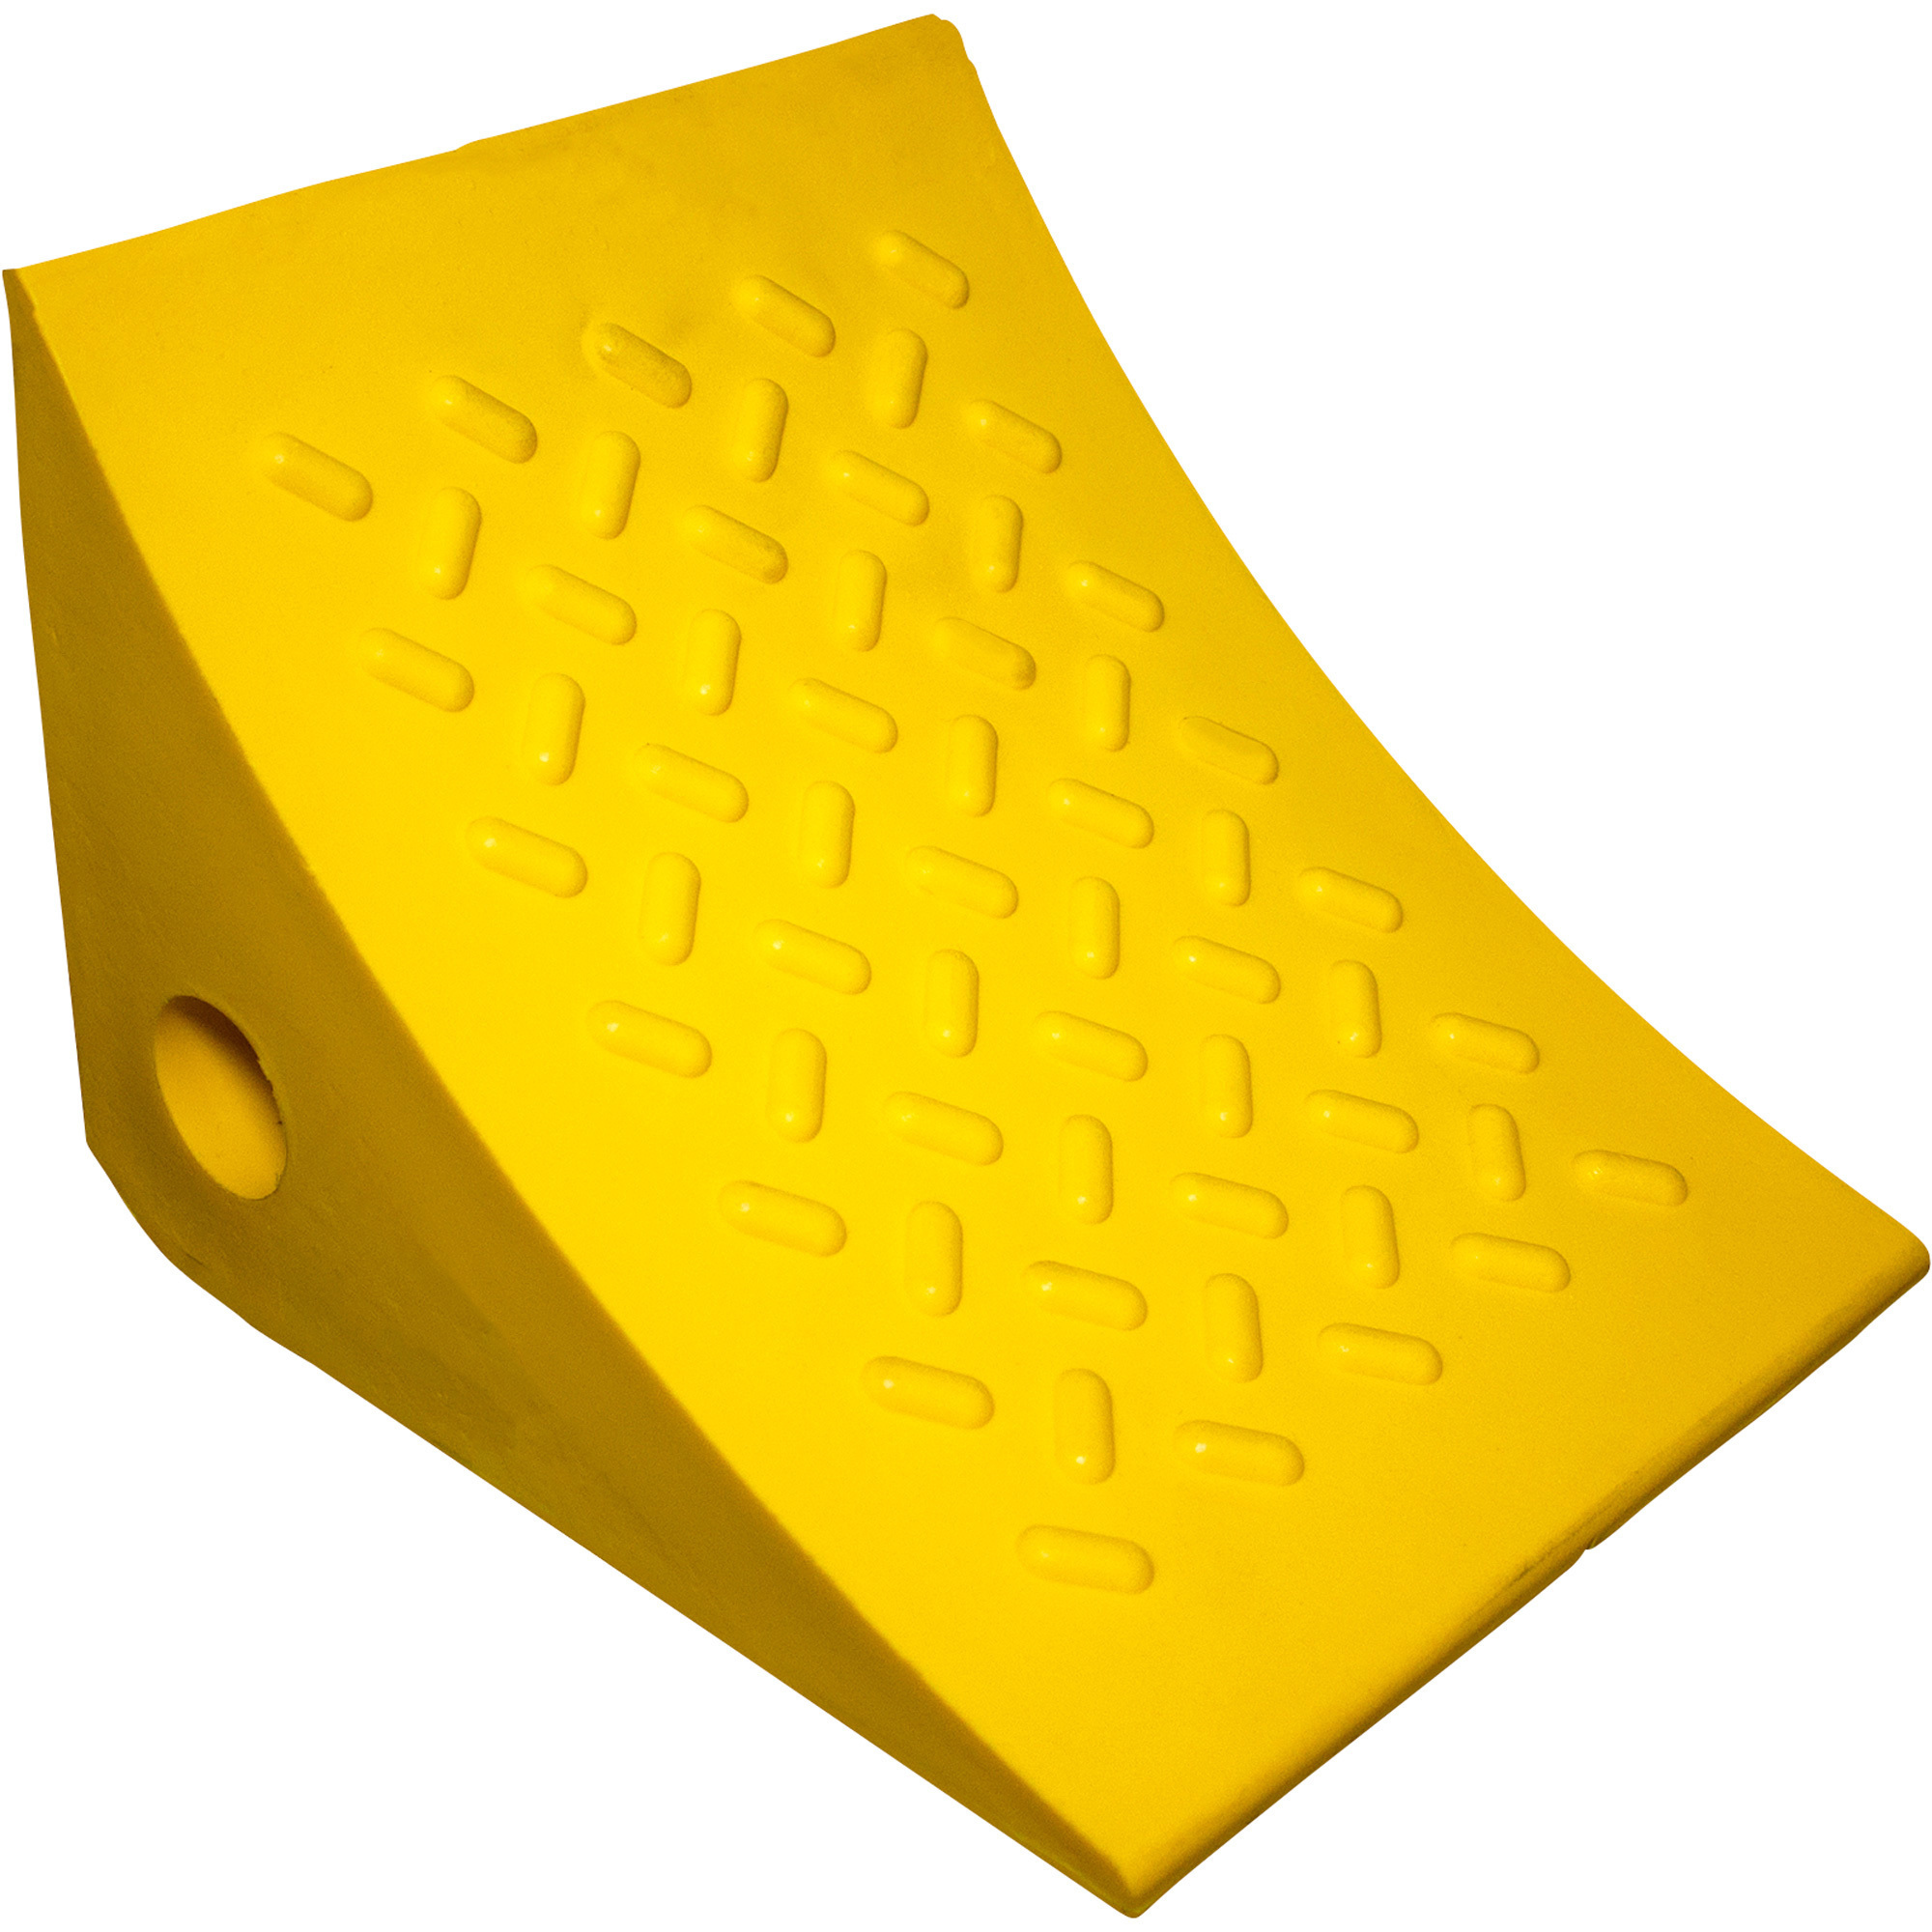 ESCO Wheel Chock â Safety Yellow, 5-Ton Capacity, 8Inch L x 7Inch H